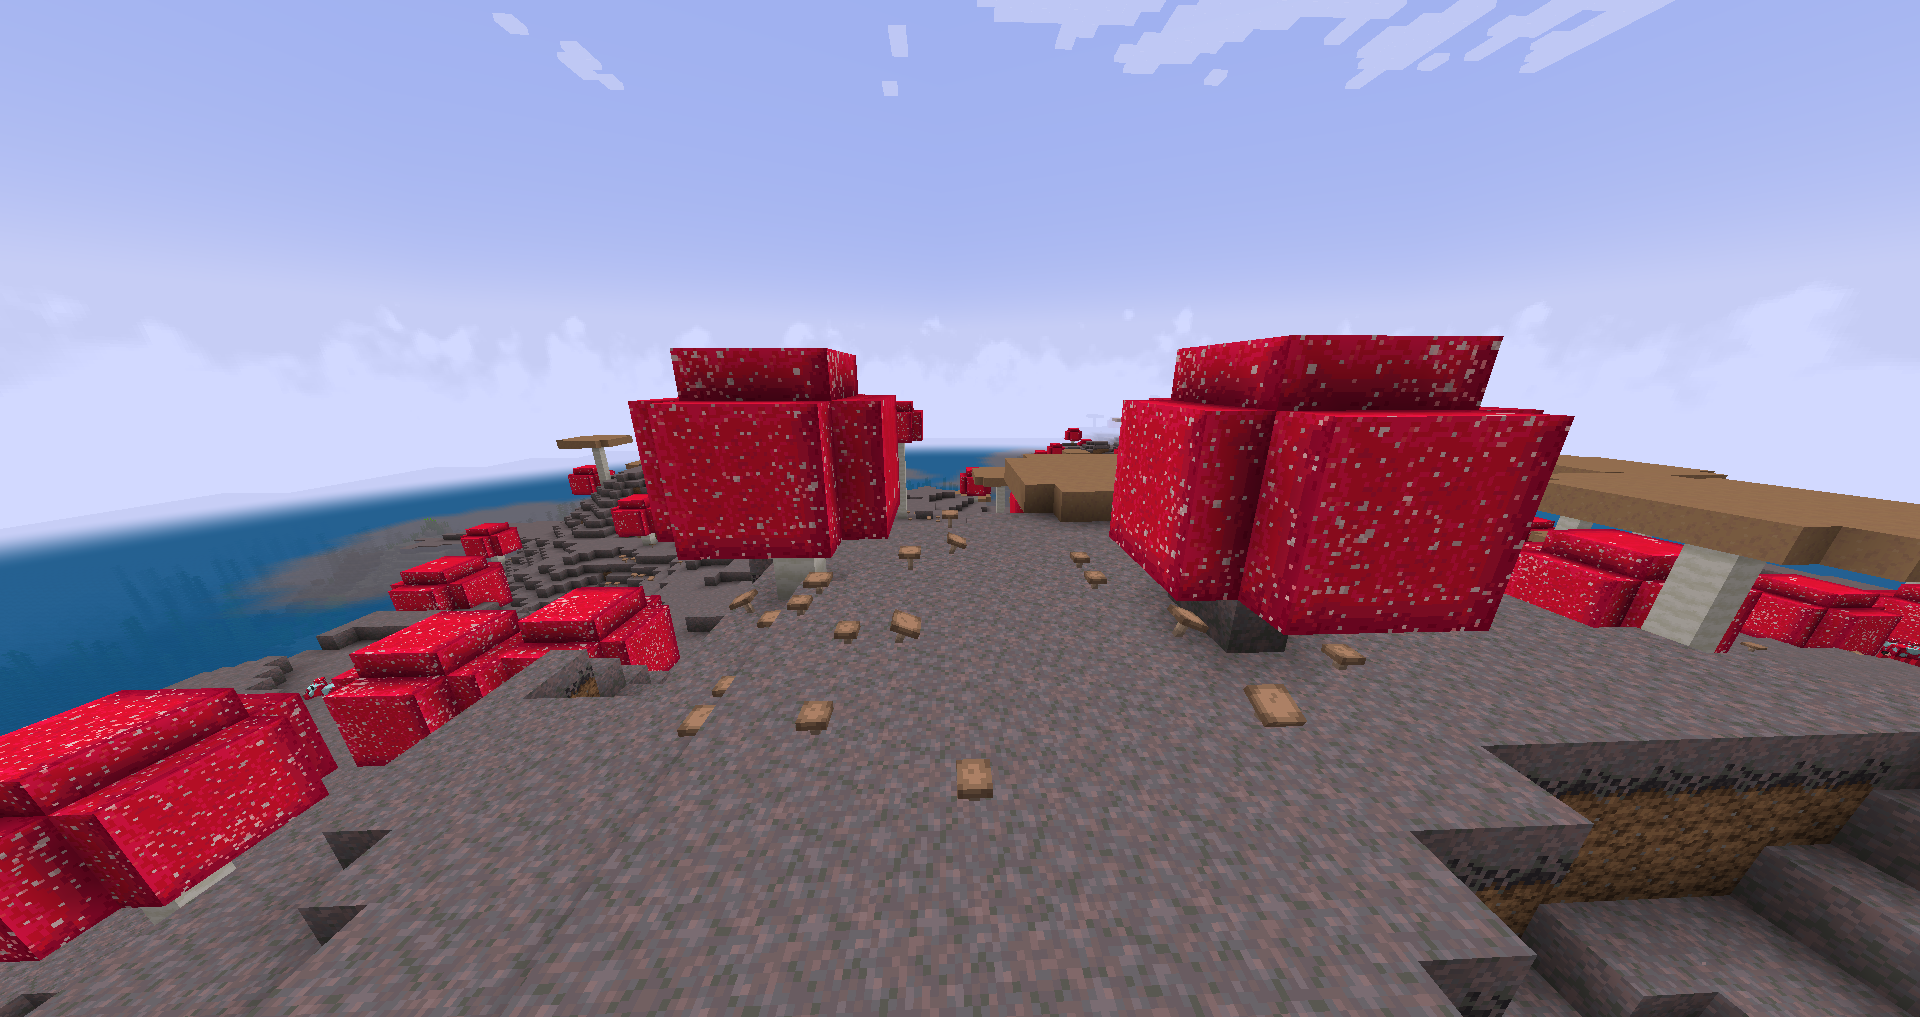 Advanced CTM for various materials, like red mushroom blocks